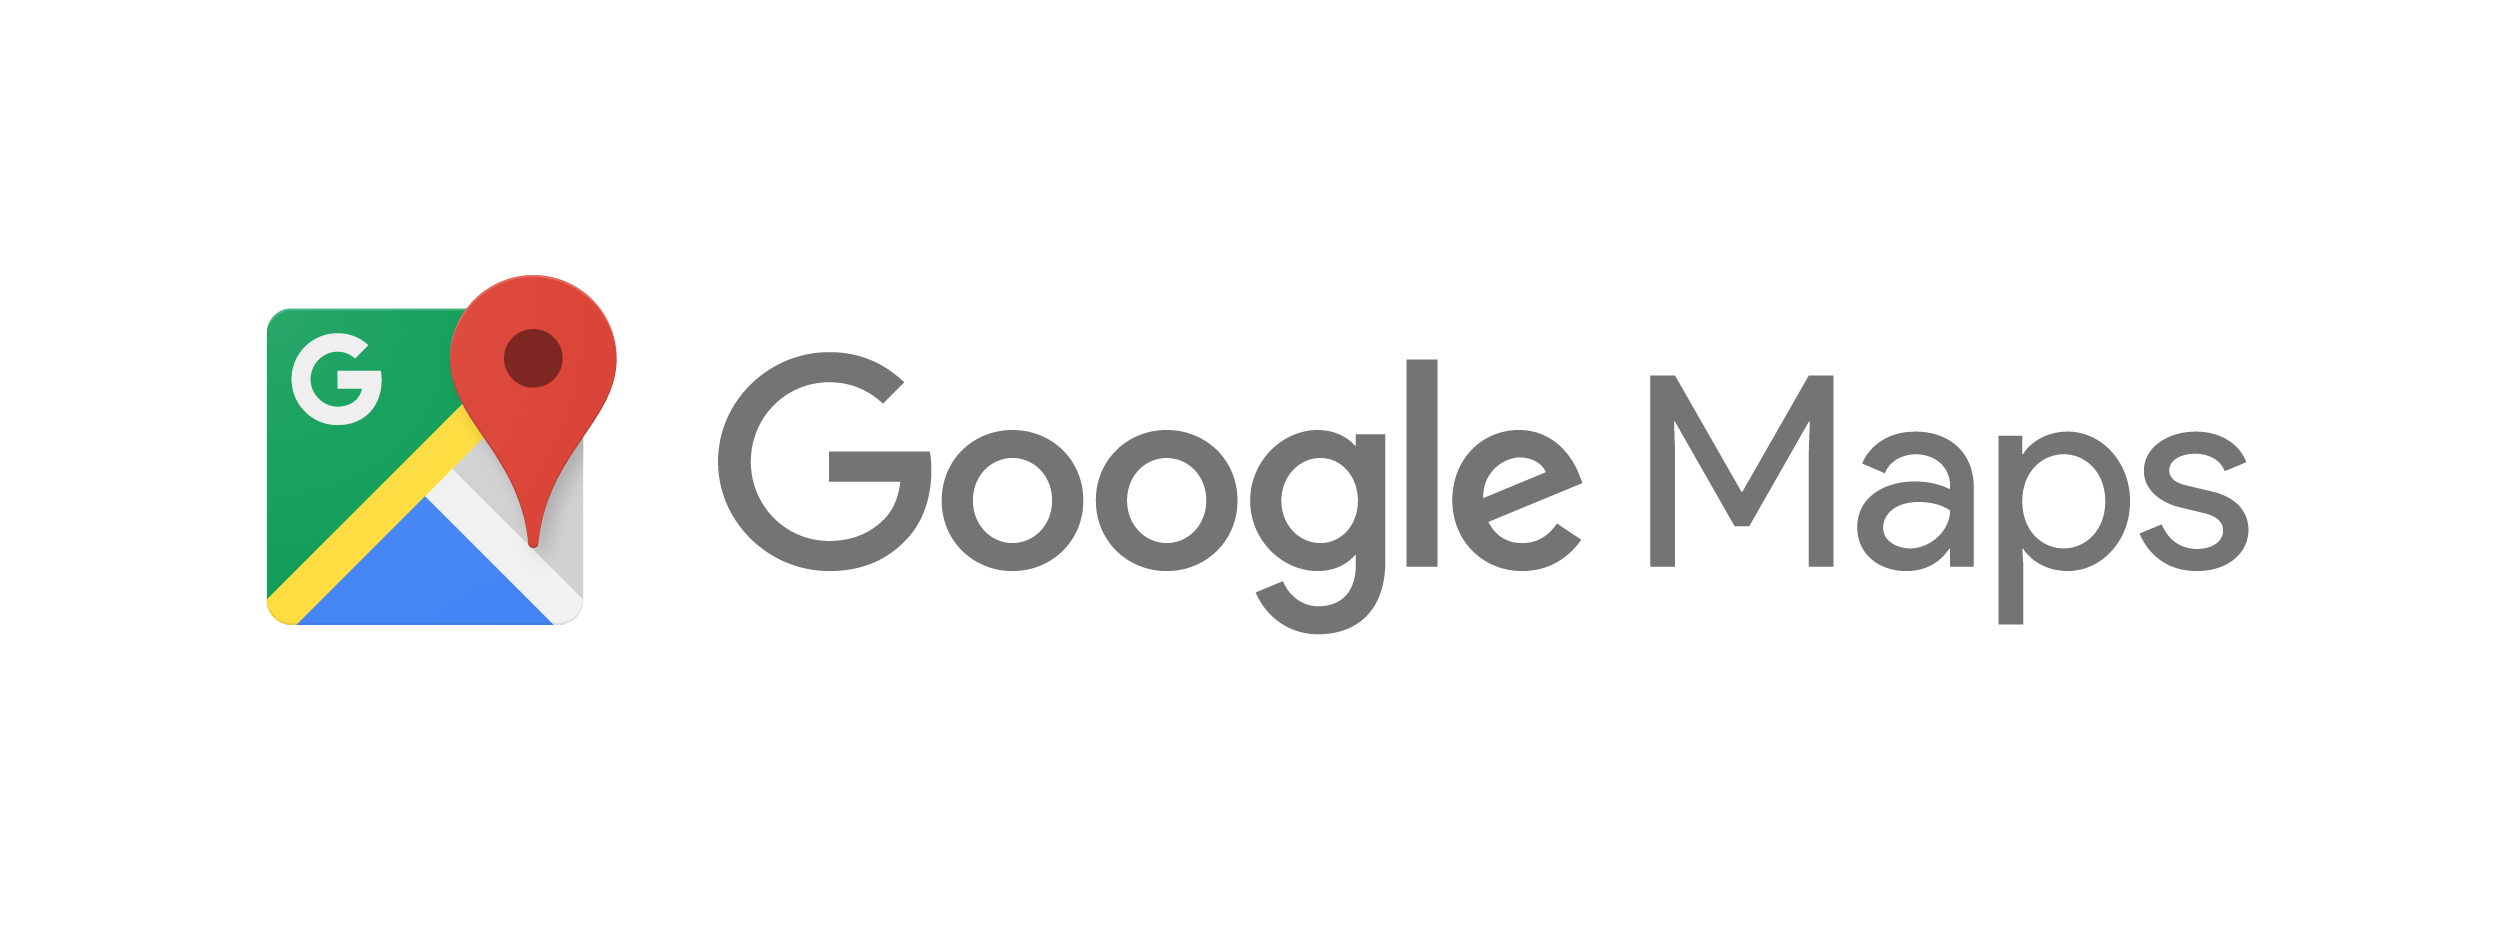 Google Maps Logo - kisspng-google-maps-google-cloud-platform-g-suite-logo-google ...